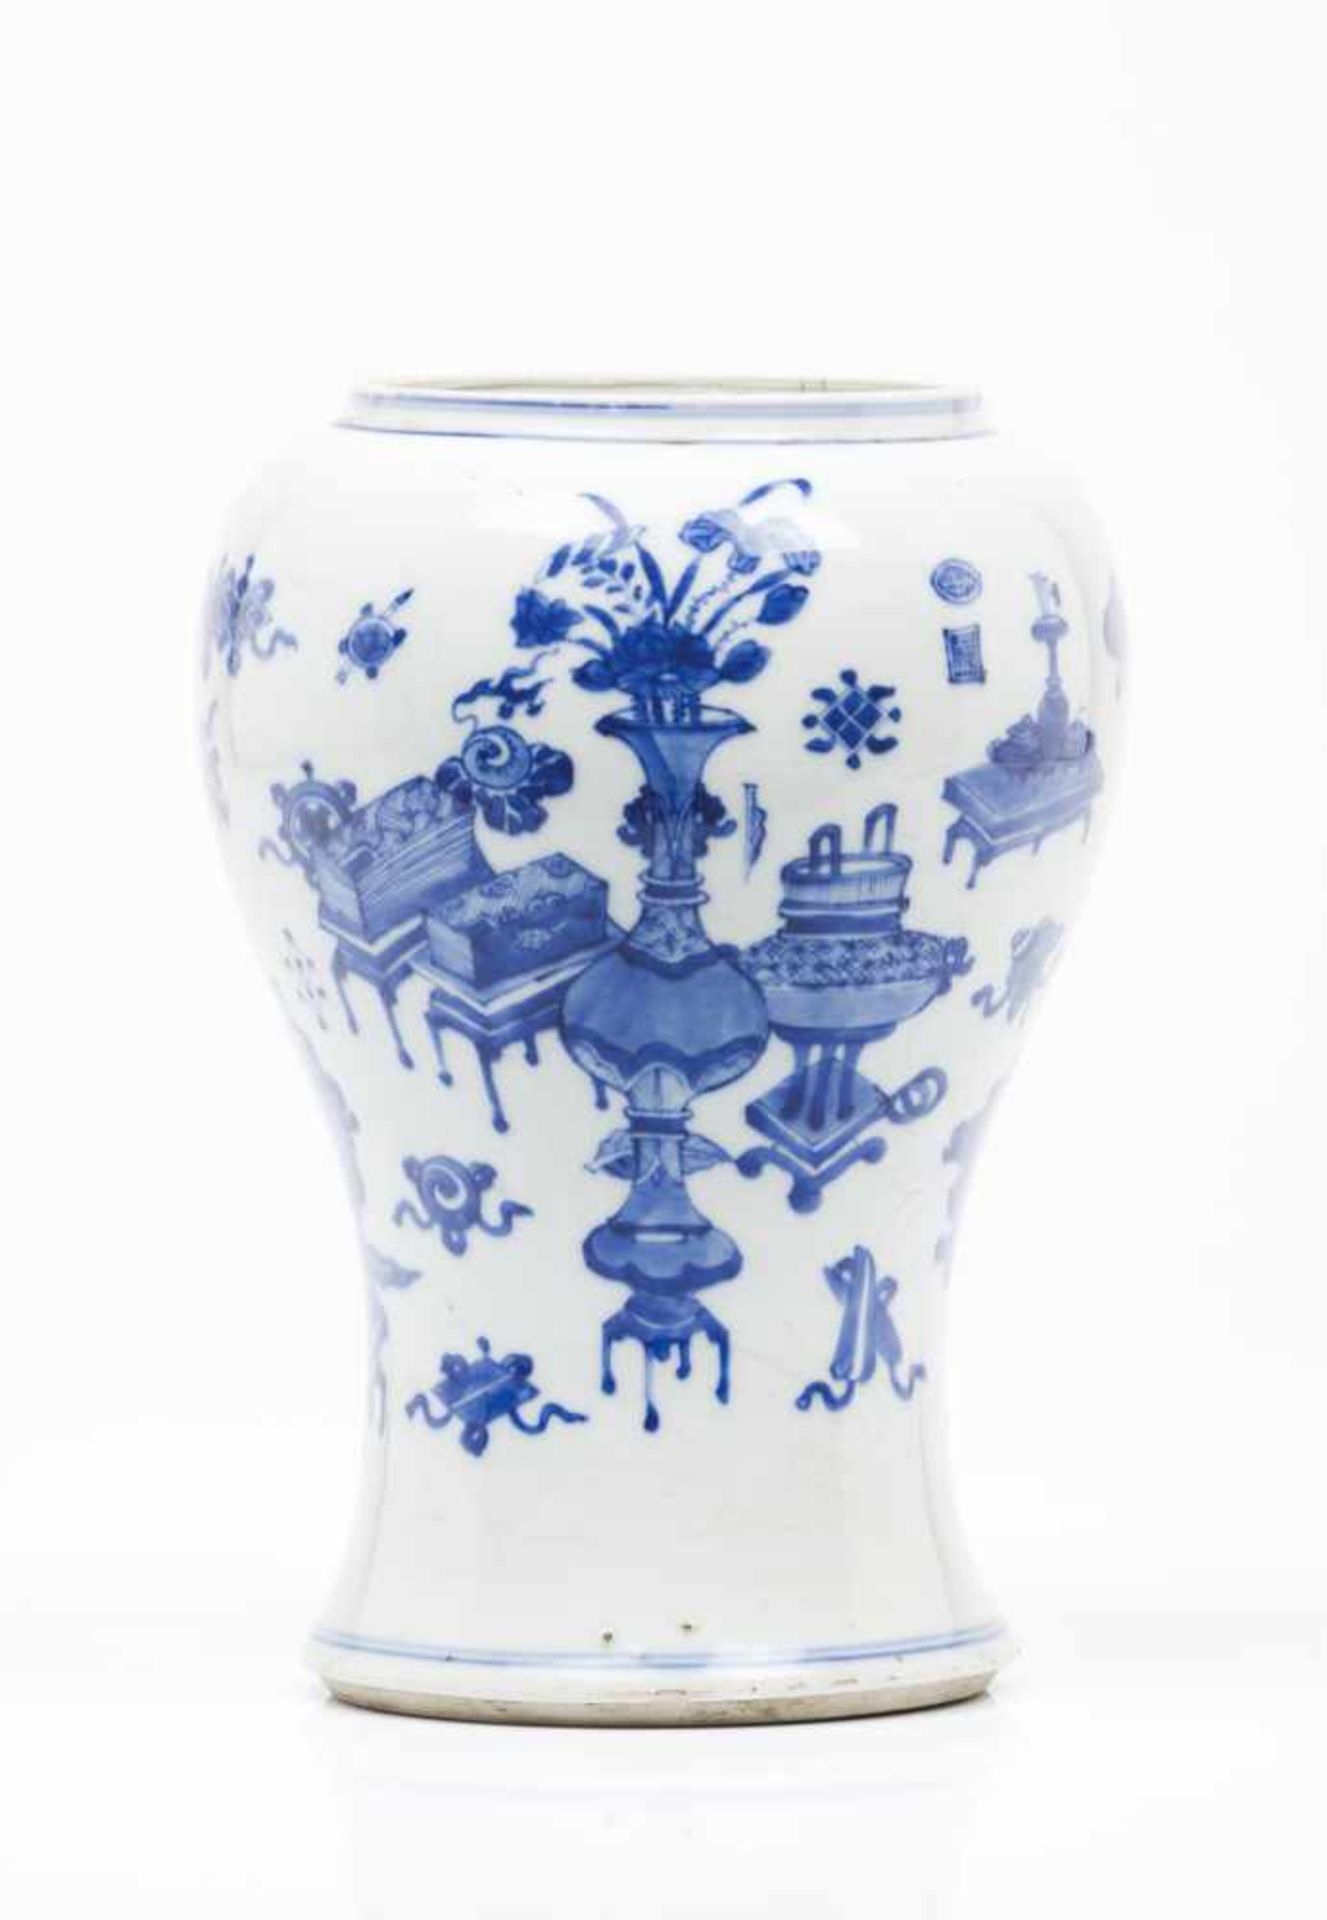 A potChinese porcelainBlue underglaze decoration with precious objectsQing dynasty(shortened neck)